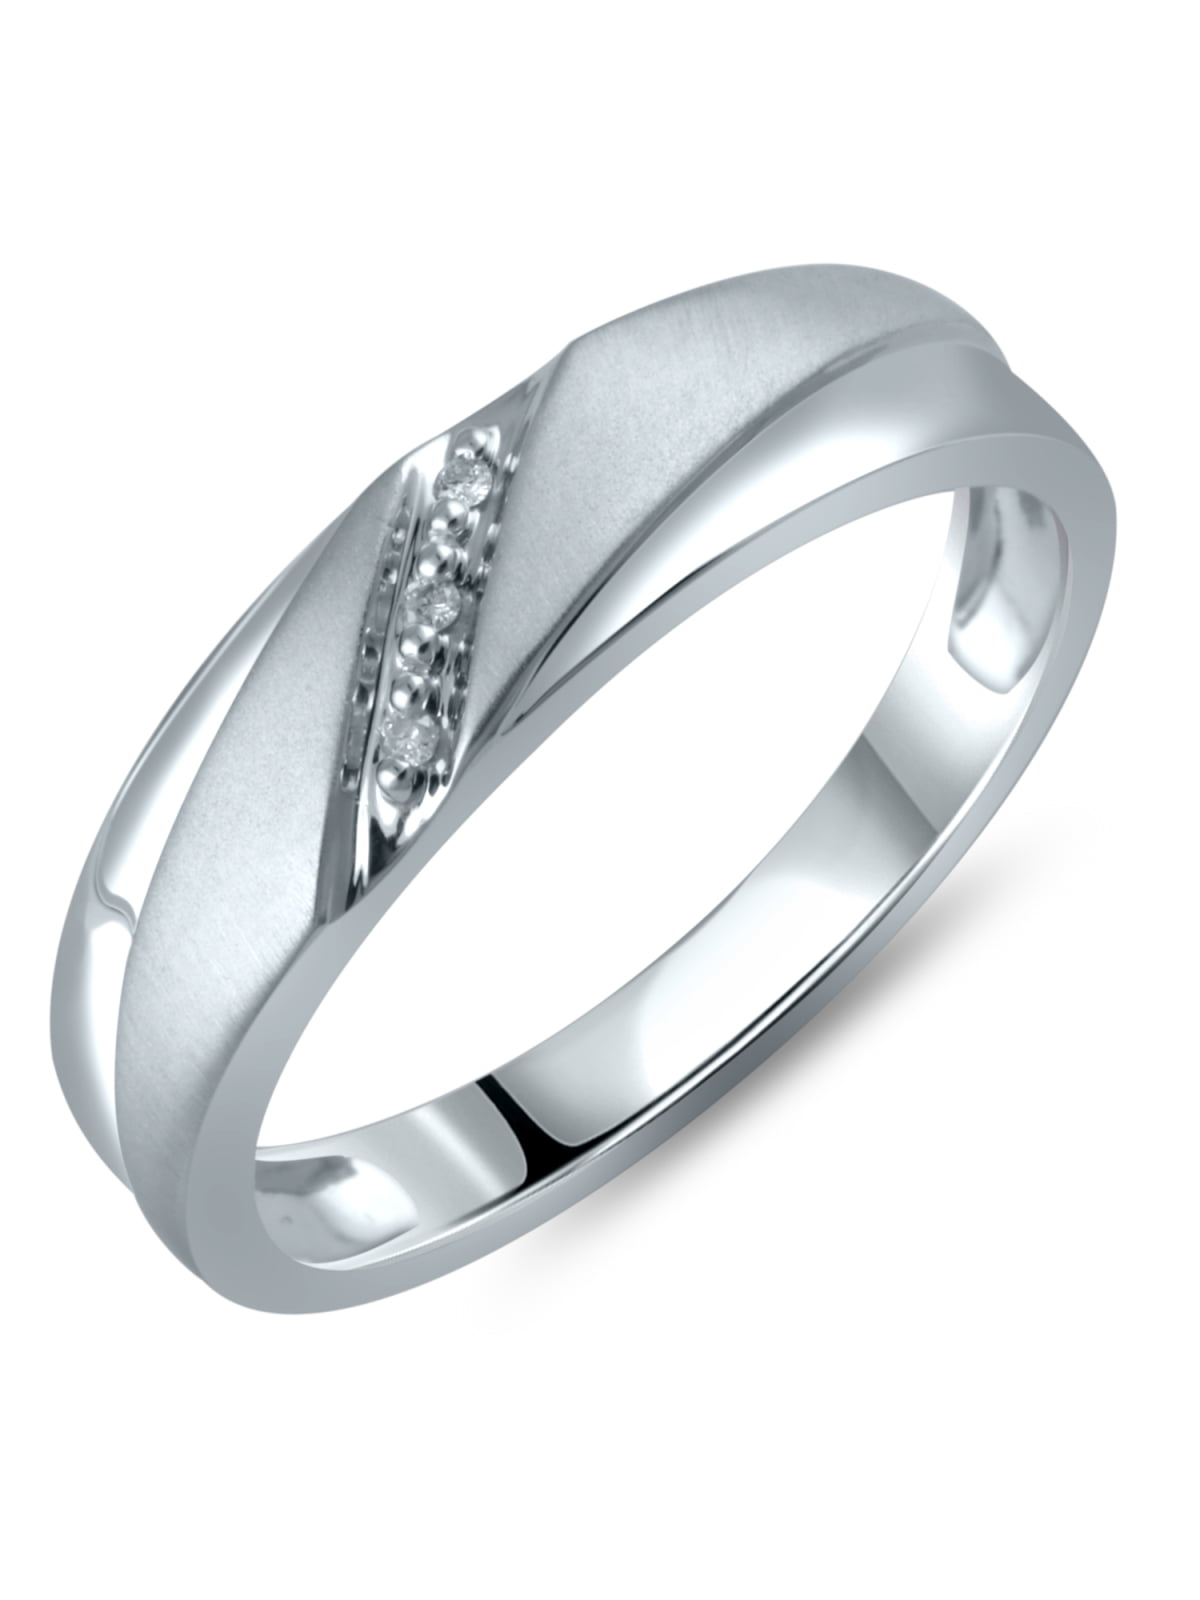 10K White Gold Genuine Diamond Accent Men's Ring - Walmart.com